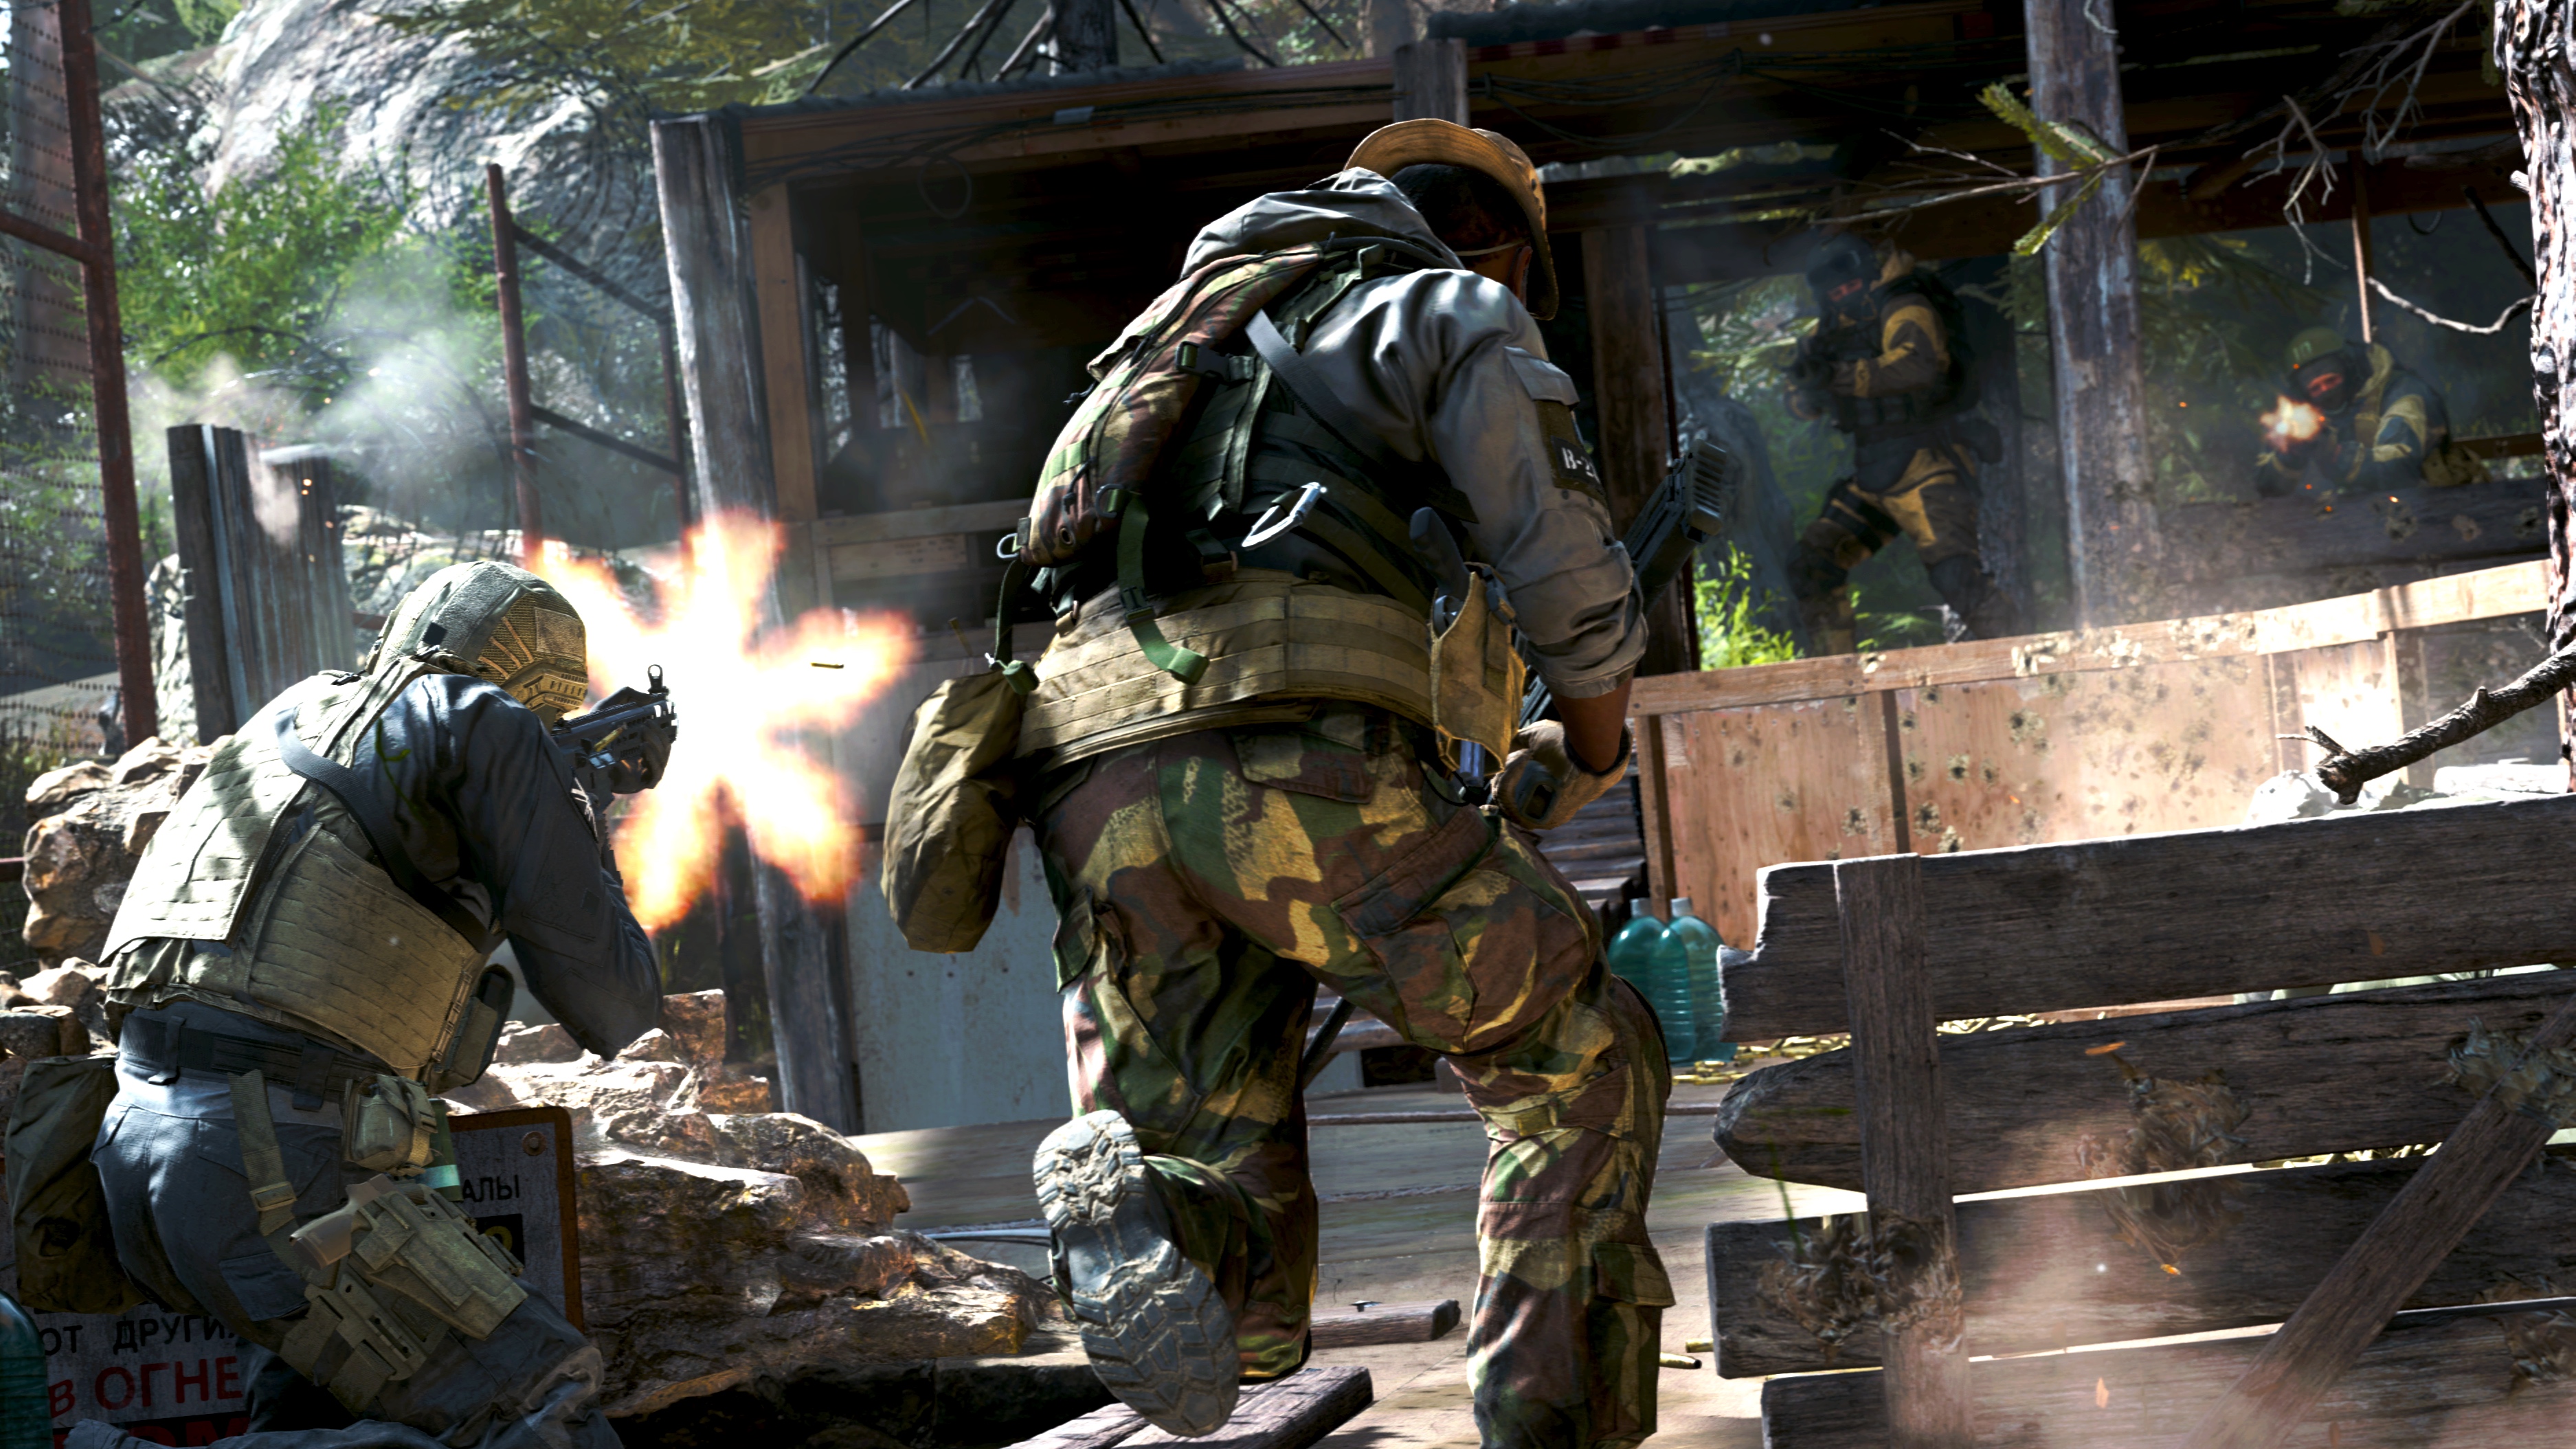 Descarga gratuita de fondo de pantalla para móvil de Obligaciones, Videojuego, Call Of Duty, Call Of Duty: Modern Warfare.